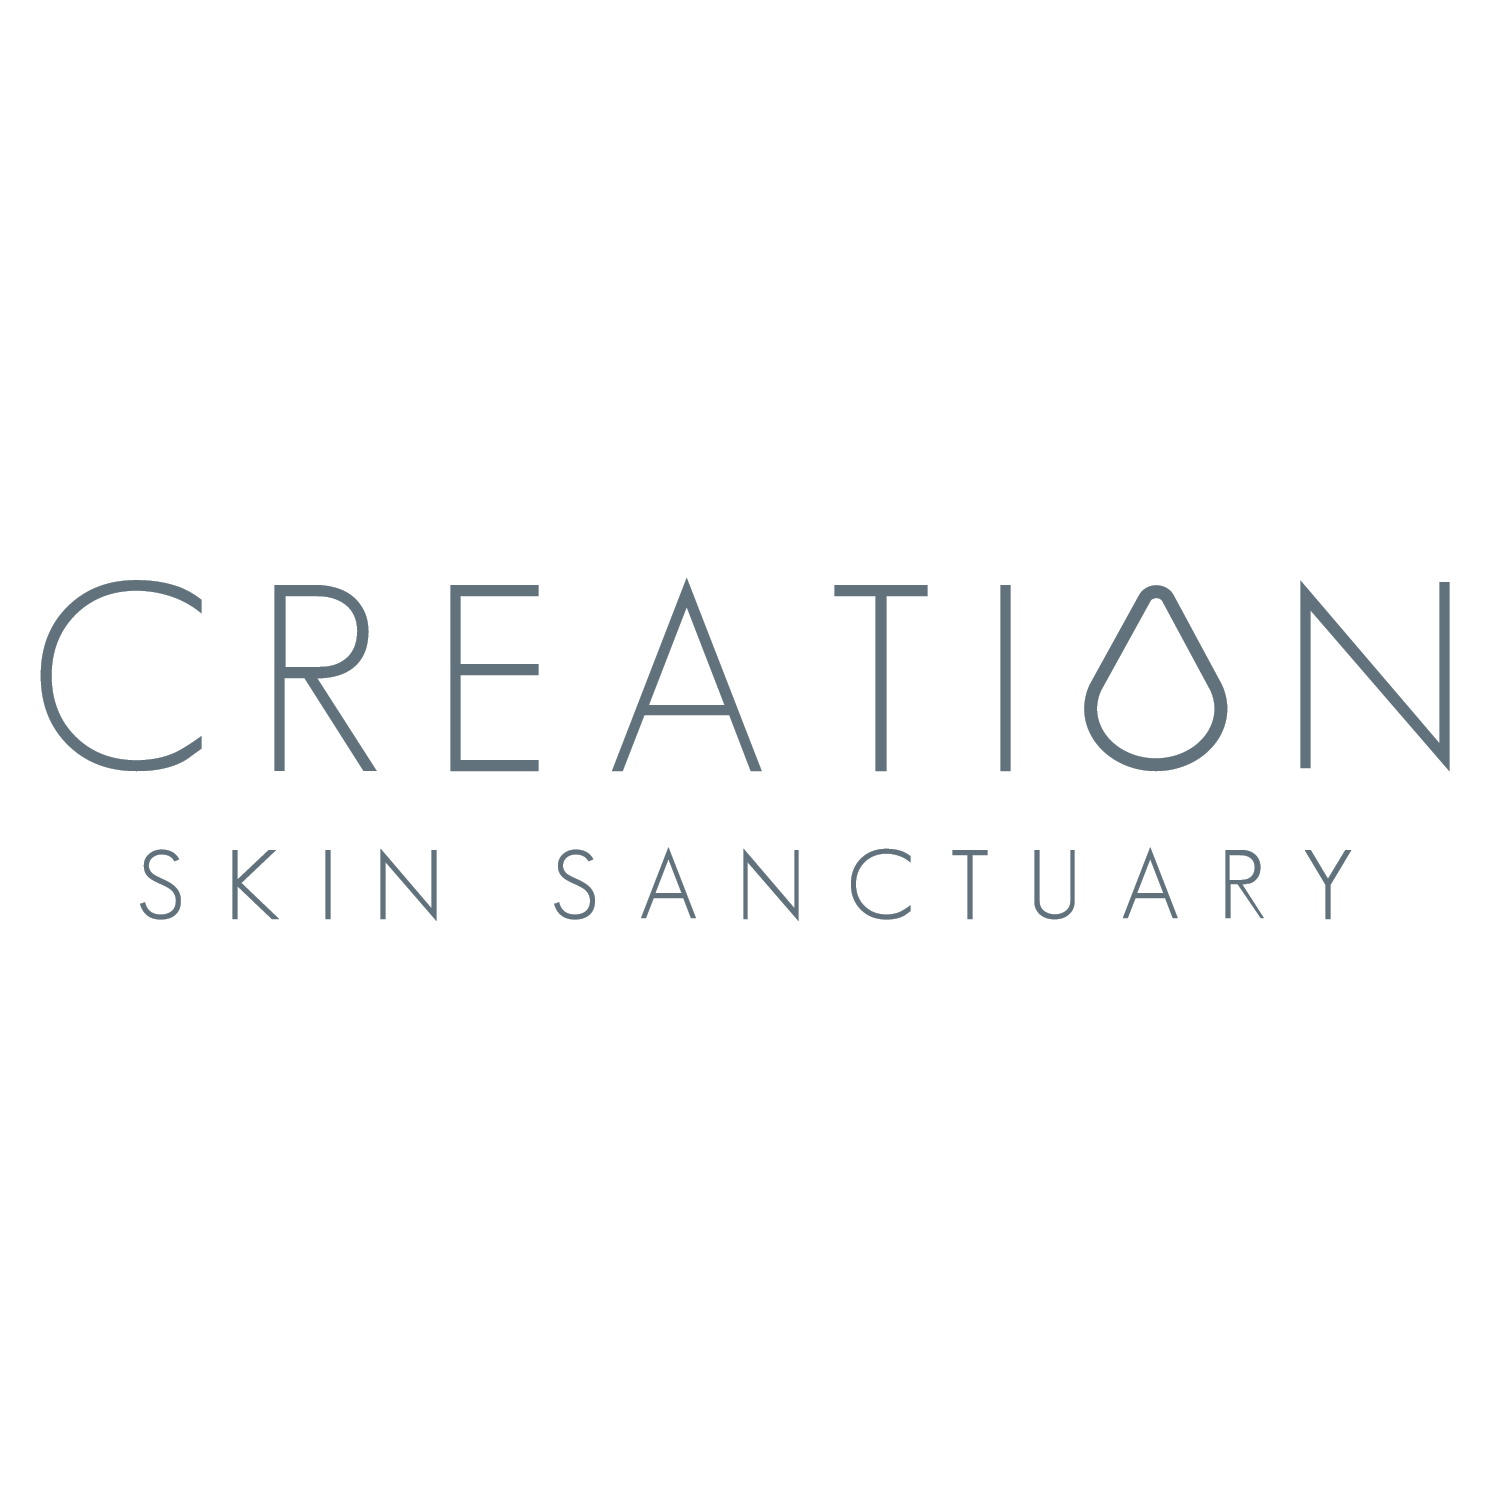 Creation Skin Sanctuary logo